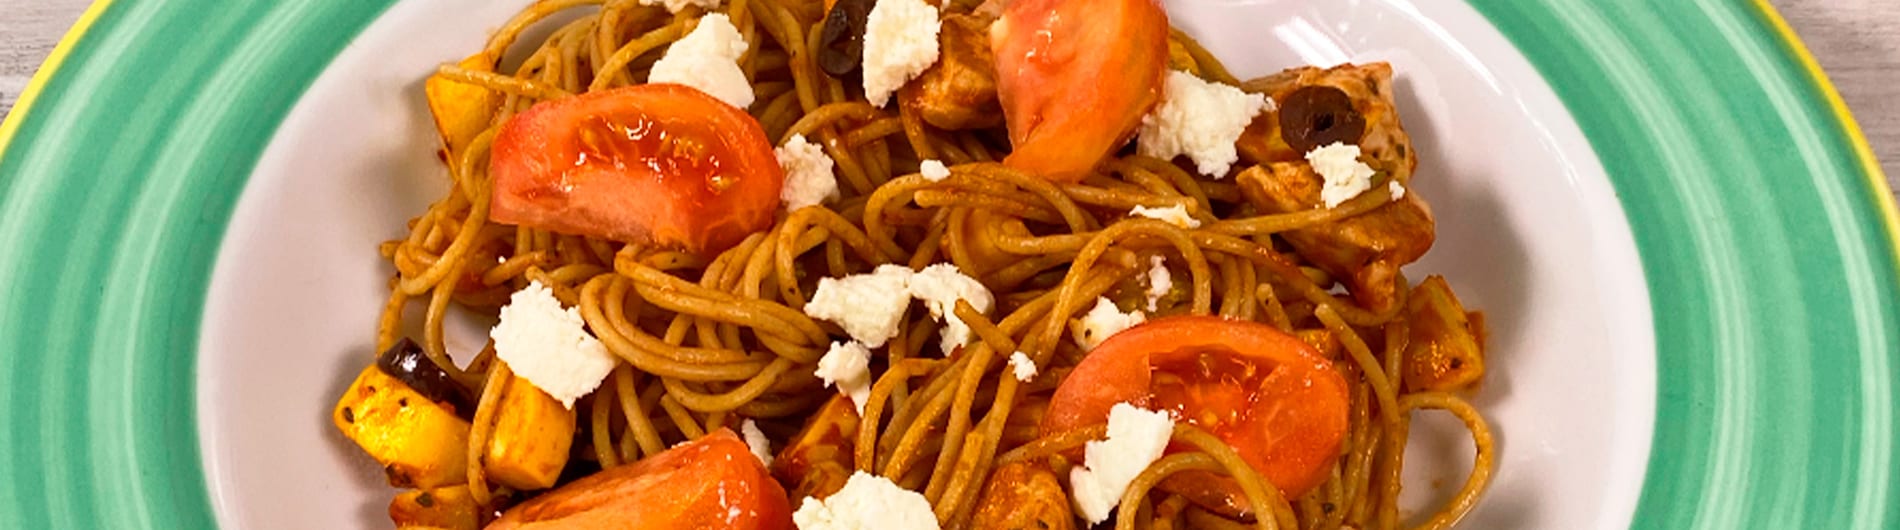 Banner Spaghetti sin gluten al estilo mediterráneo